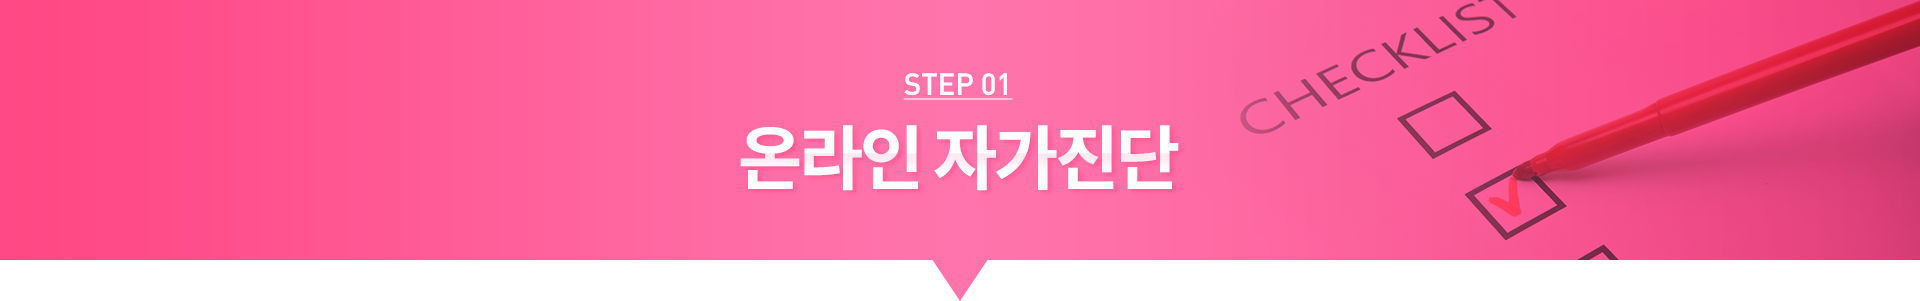 STEP01 온라인 자가진단